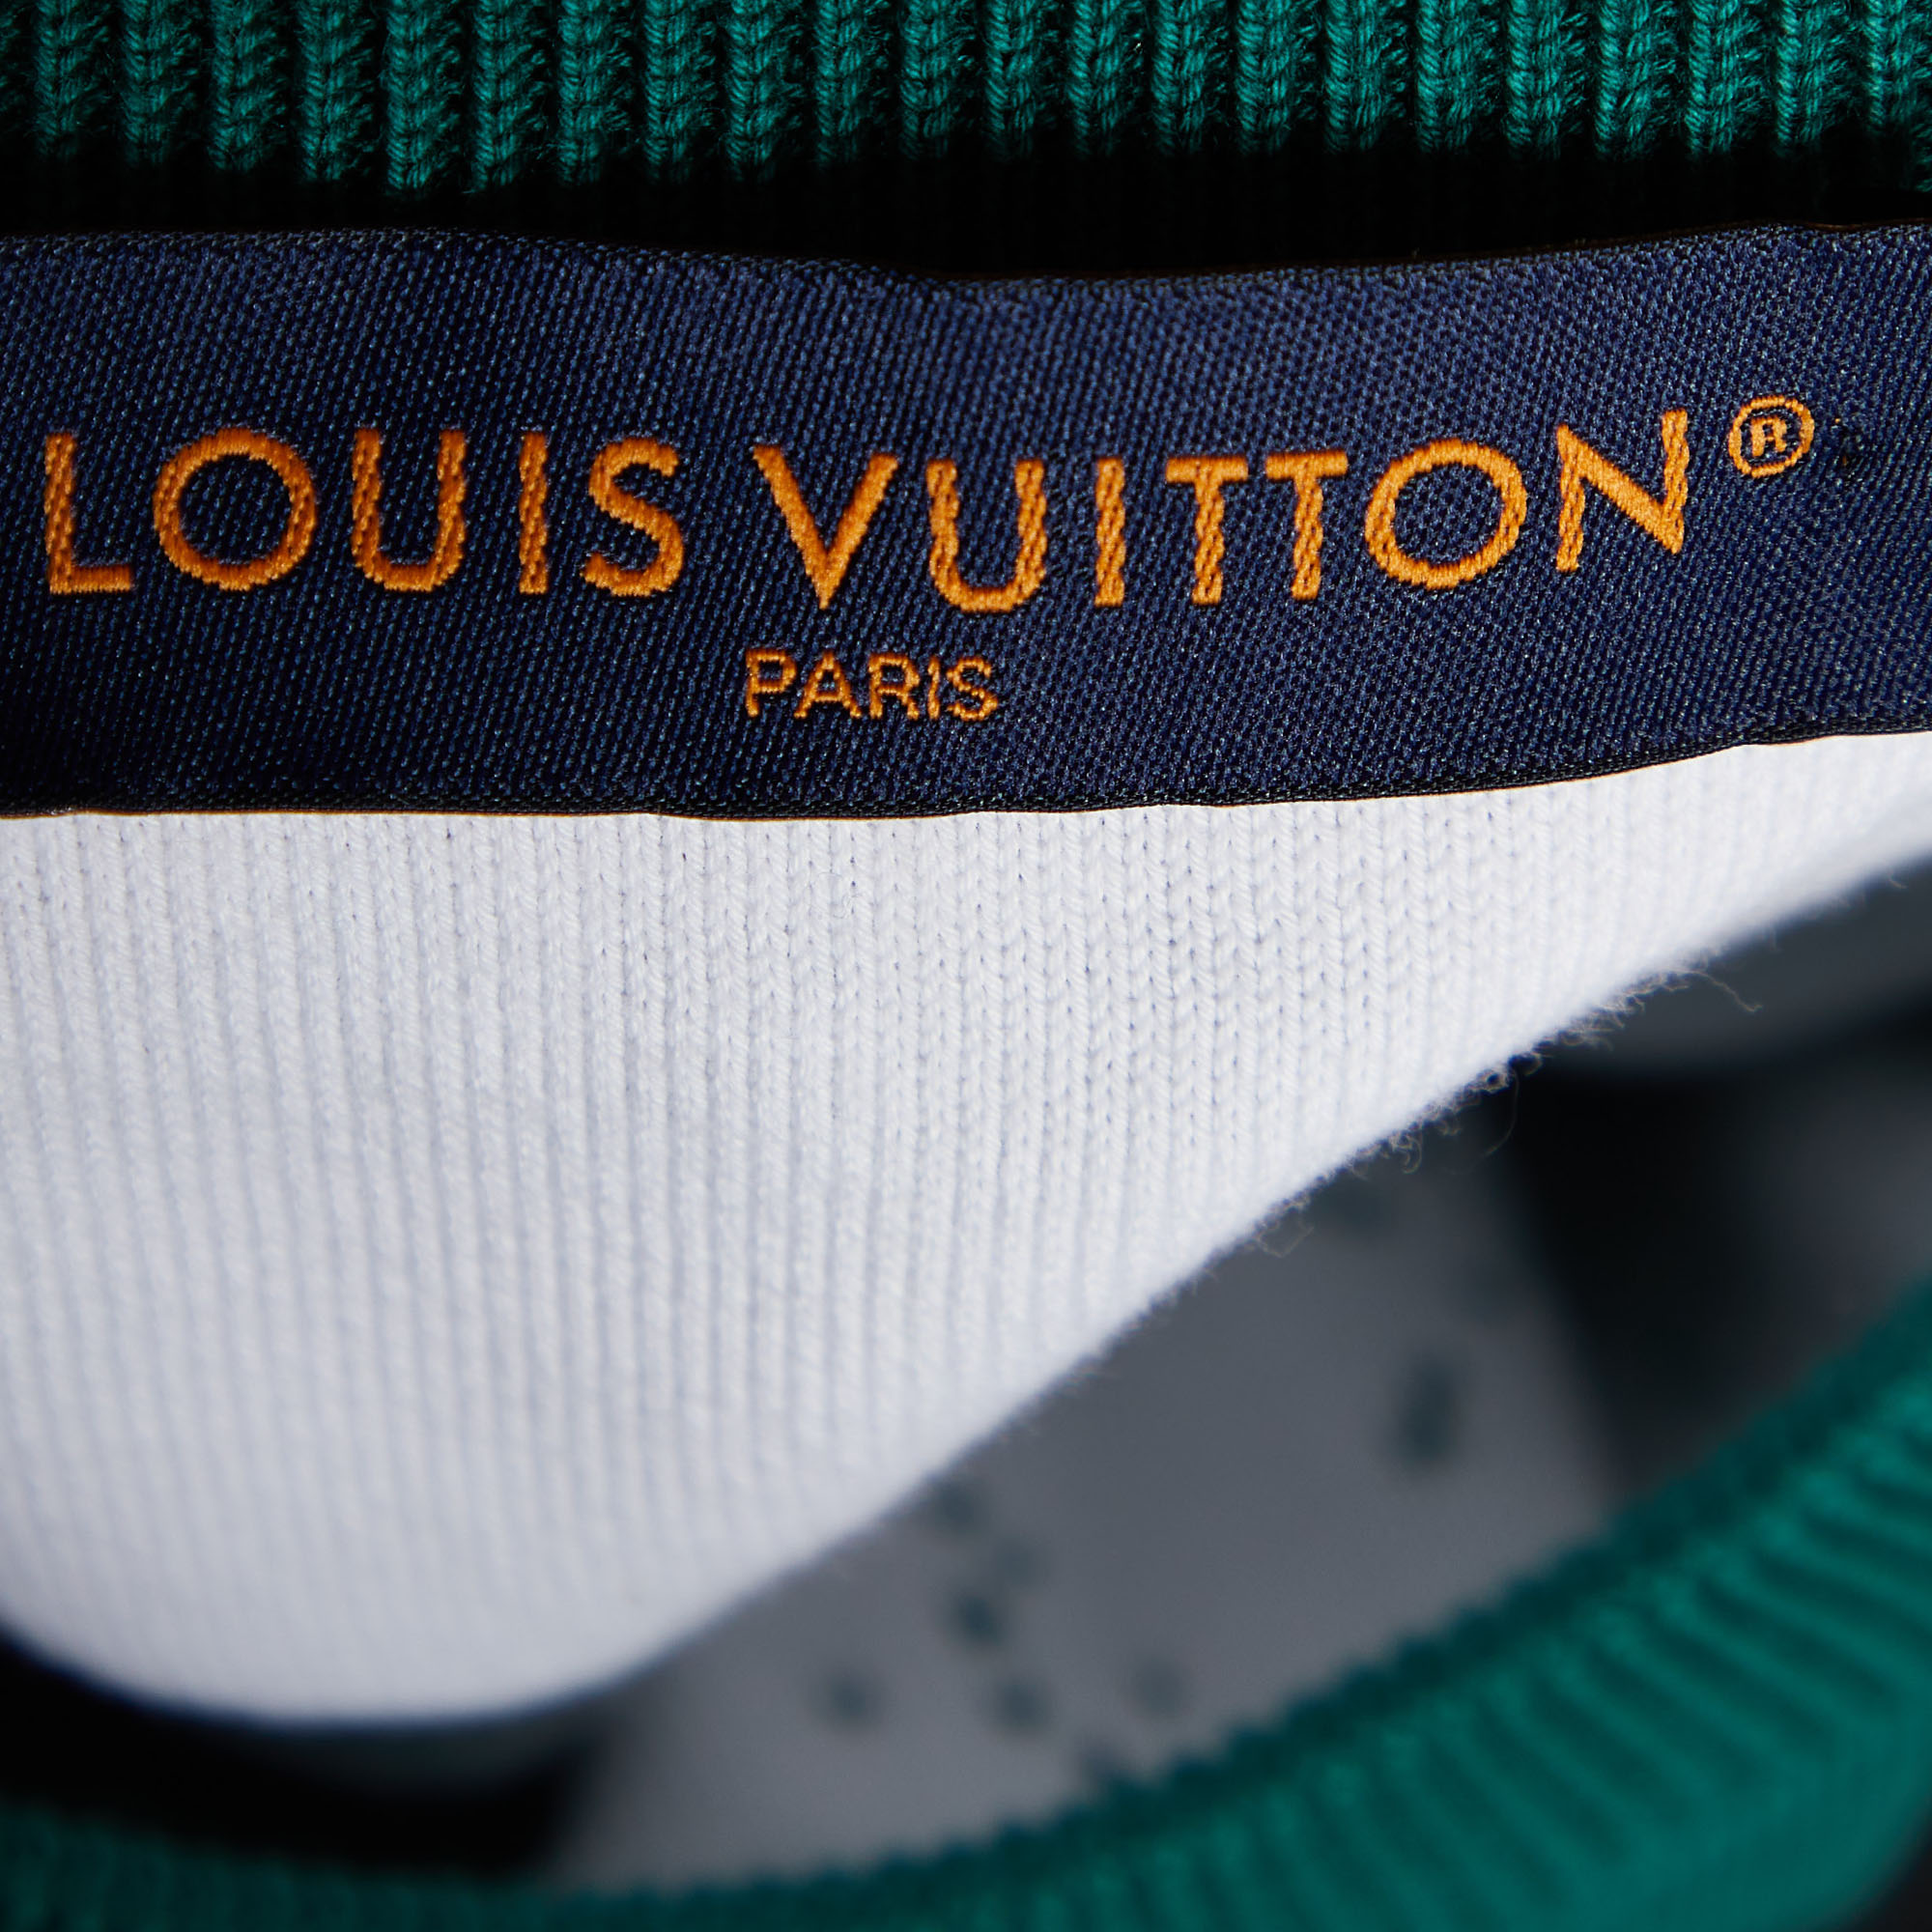 Louis Vuitton Green Gradient Monogram Cotton Sweater XS